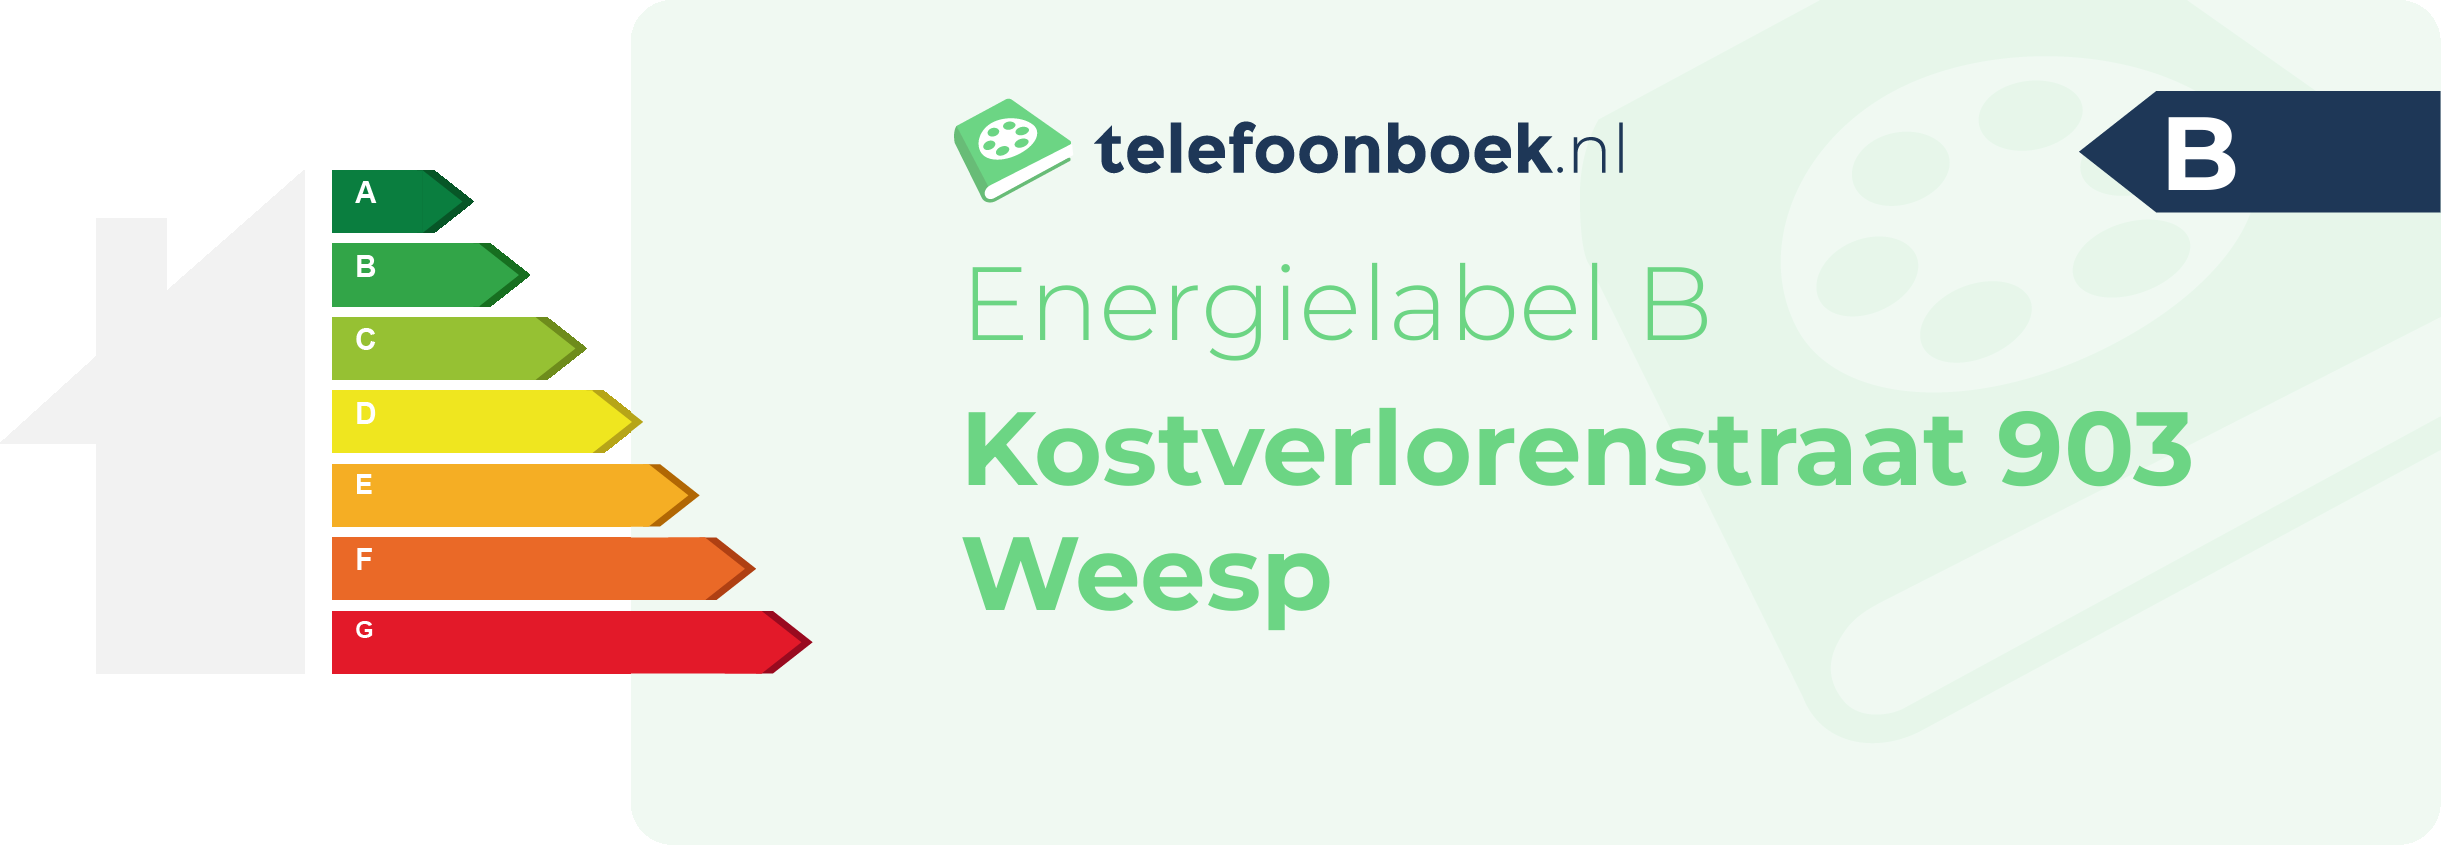 Energielabel Kostverlorenstraat 903 Weesp